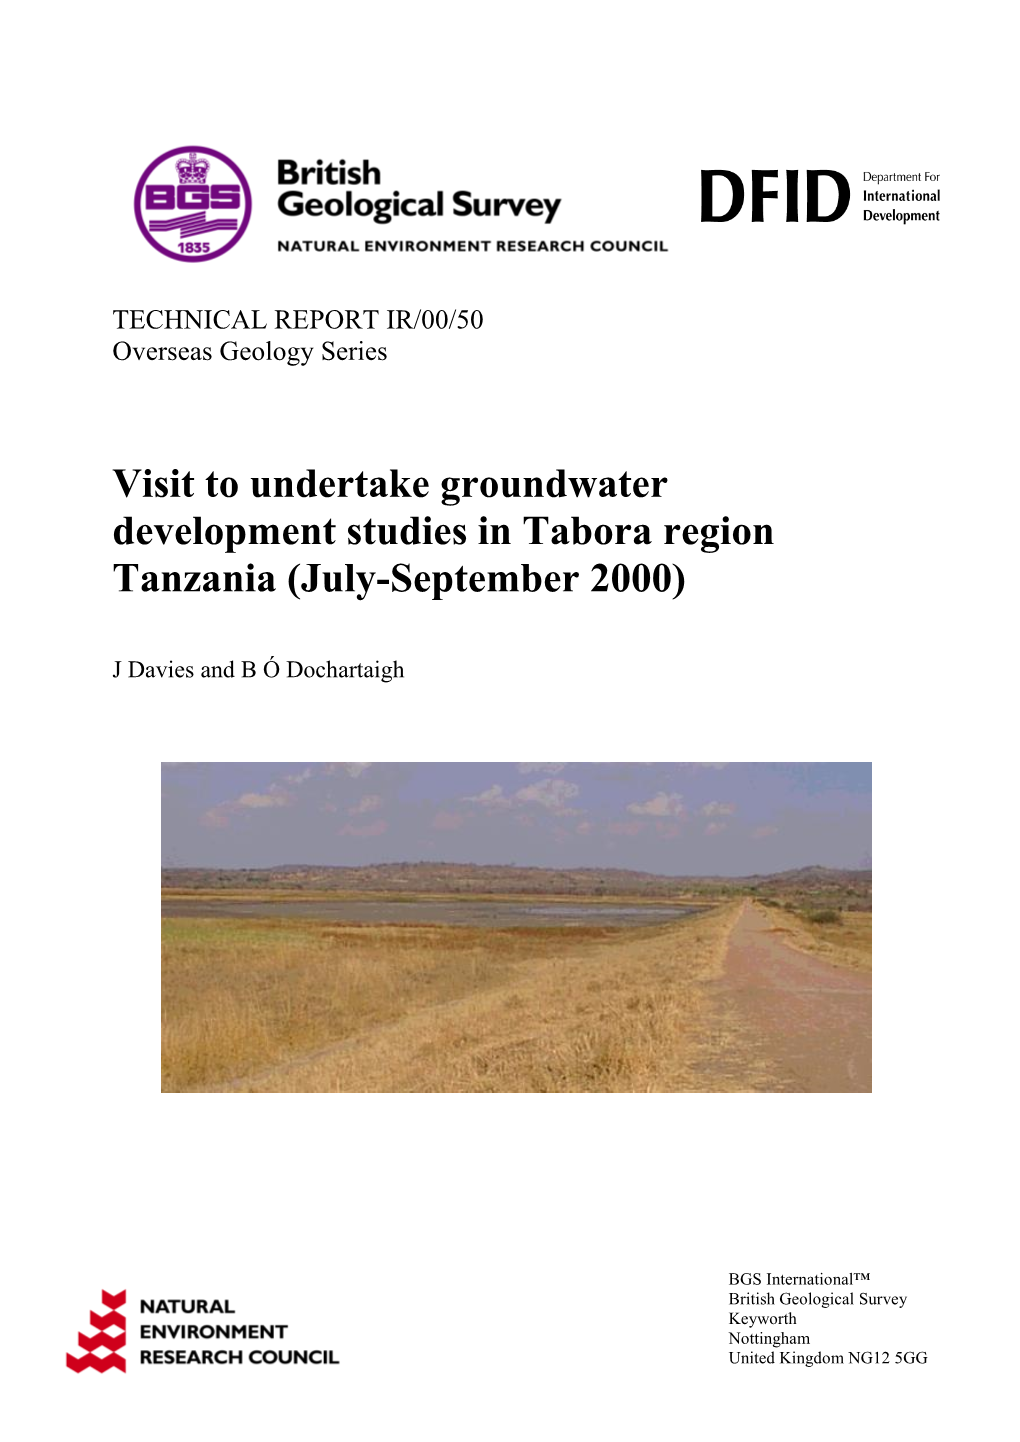 Visit to Undertake Groundwater Development Studies in Tabora Region Tanzania (July-September 2000)